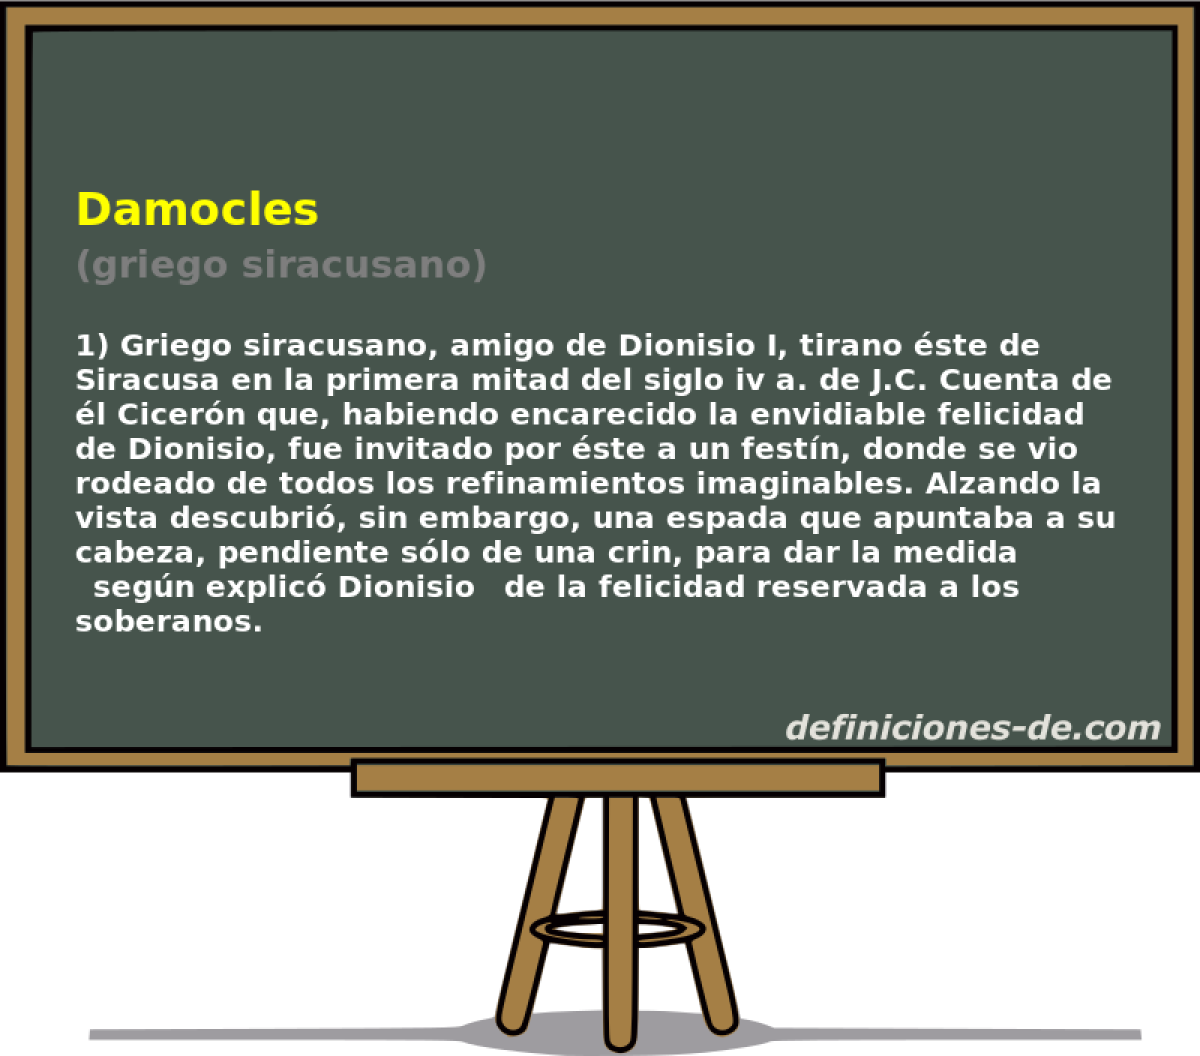 Damocles (griego siracusano)